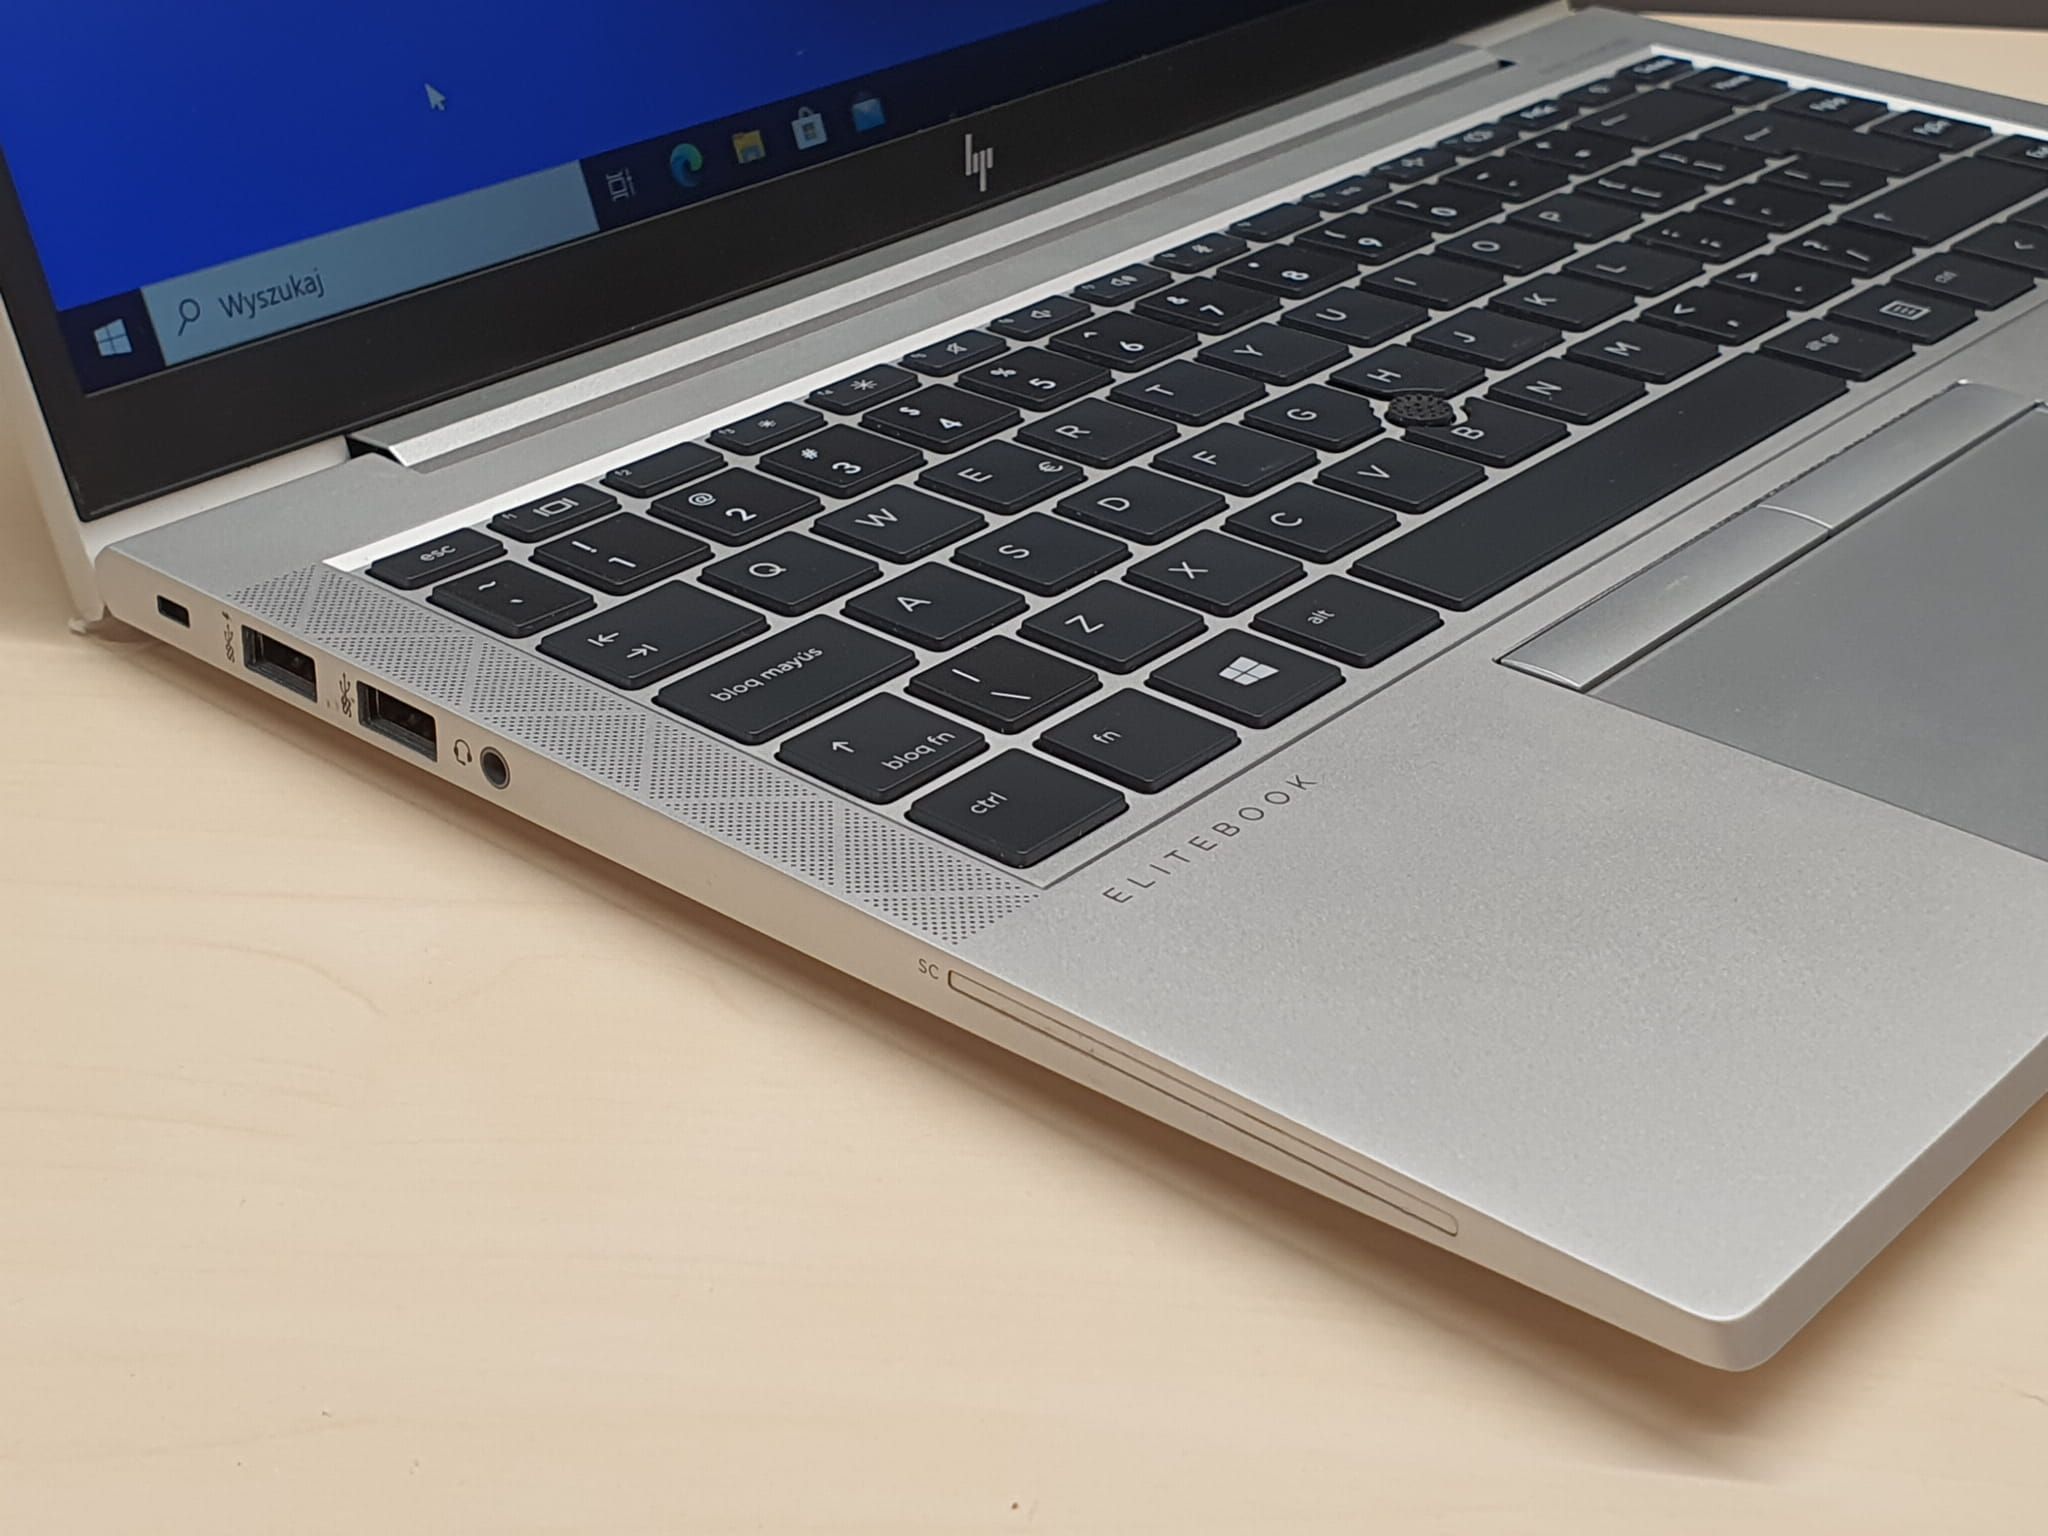 Laptop HP EliteBook 840 G7 | i5-10310U / FHD / 16RAM / 512 GB / OUTLET